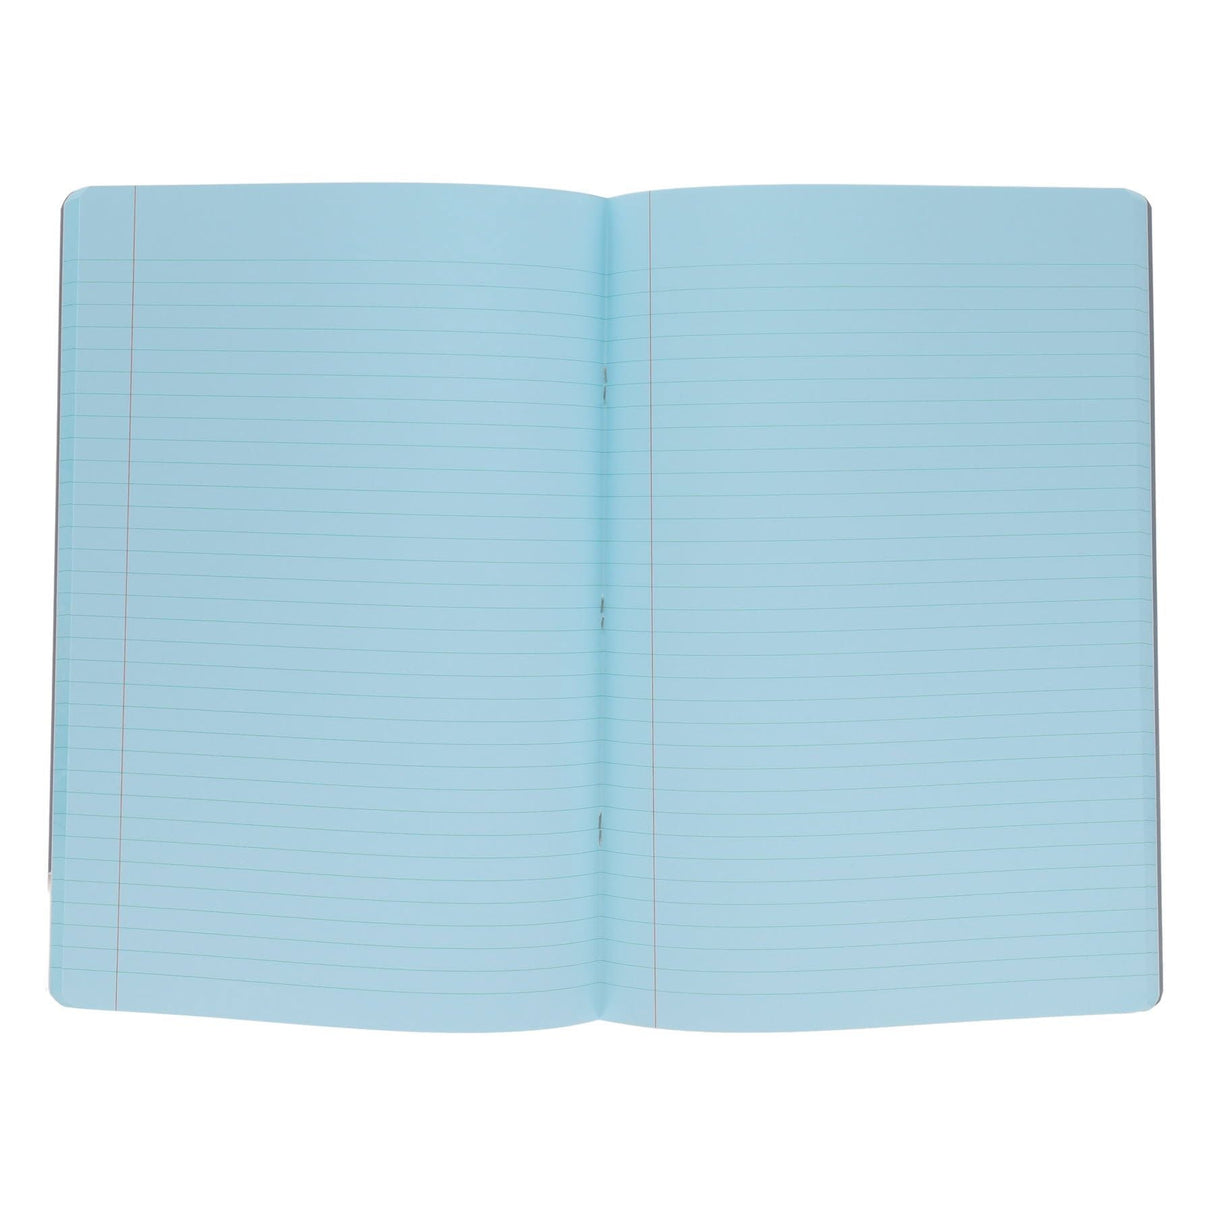 Ormond A4 Durable Cover Visual Memory Aid Manuscript Book 120 Pages - Blue-Manuscript Books-Ormond|StationeryShop.co.uk